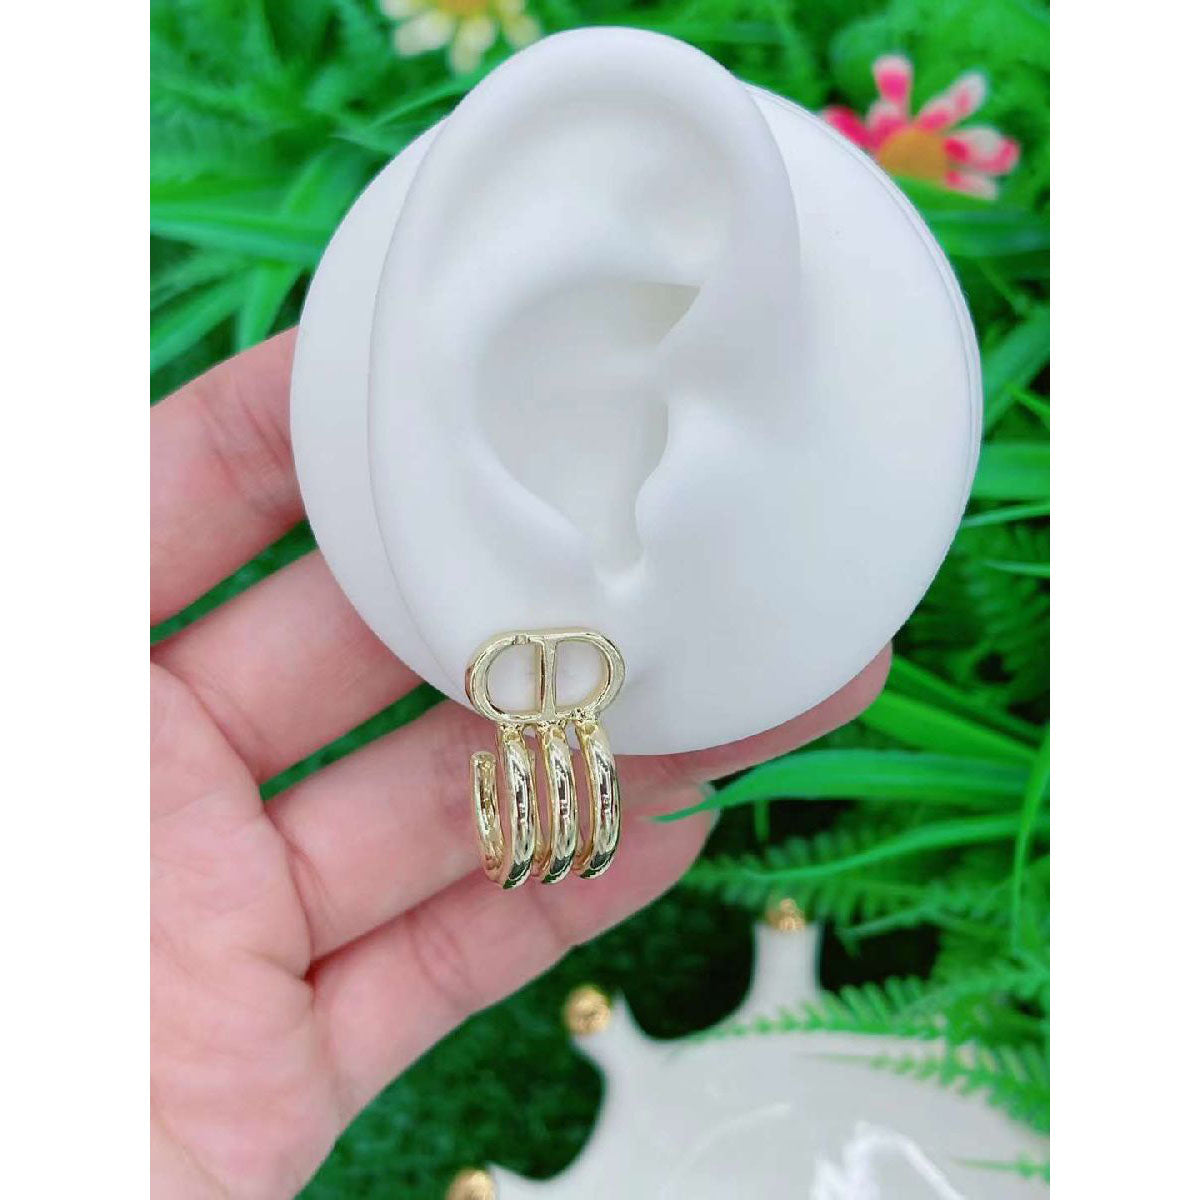 Copper C Design Gold Cubic Zirconia Stud Earring Pair For Women